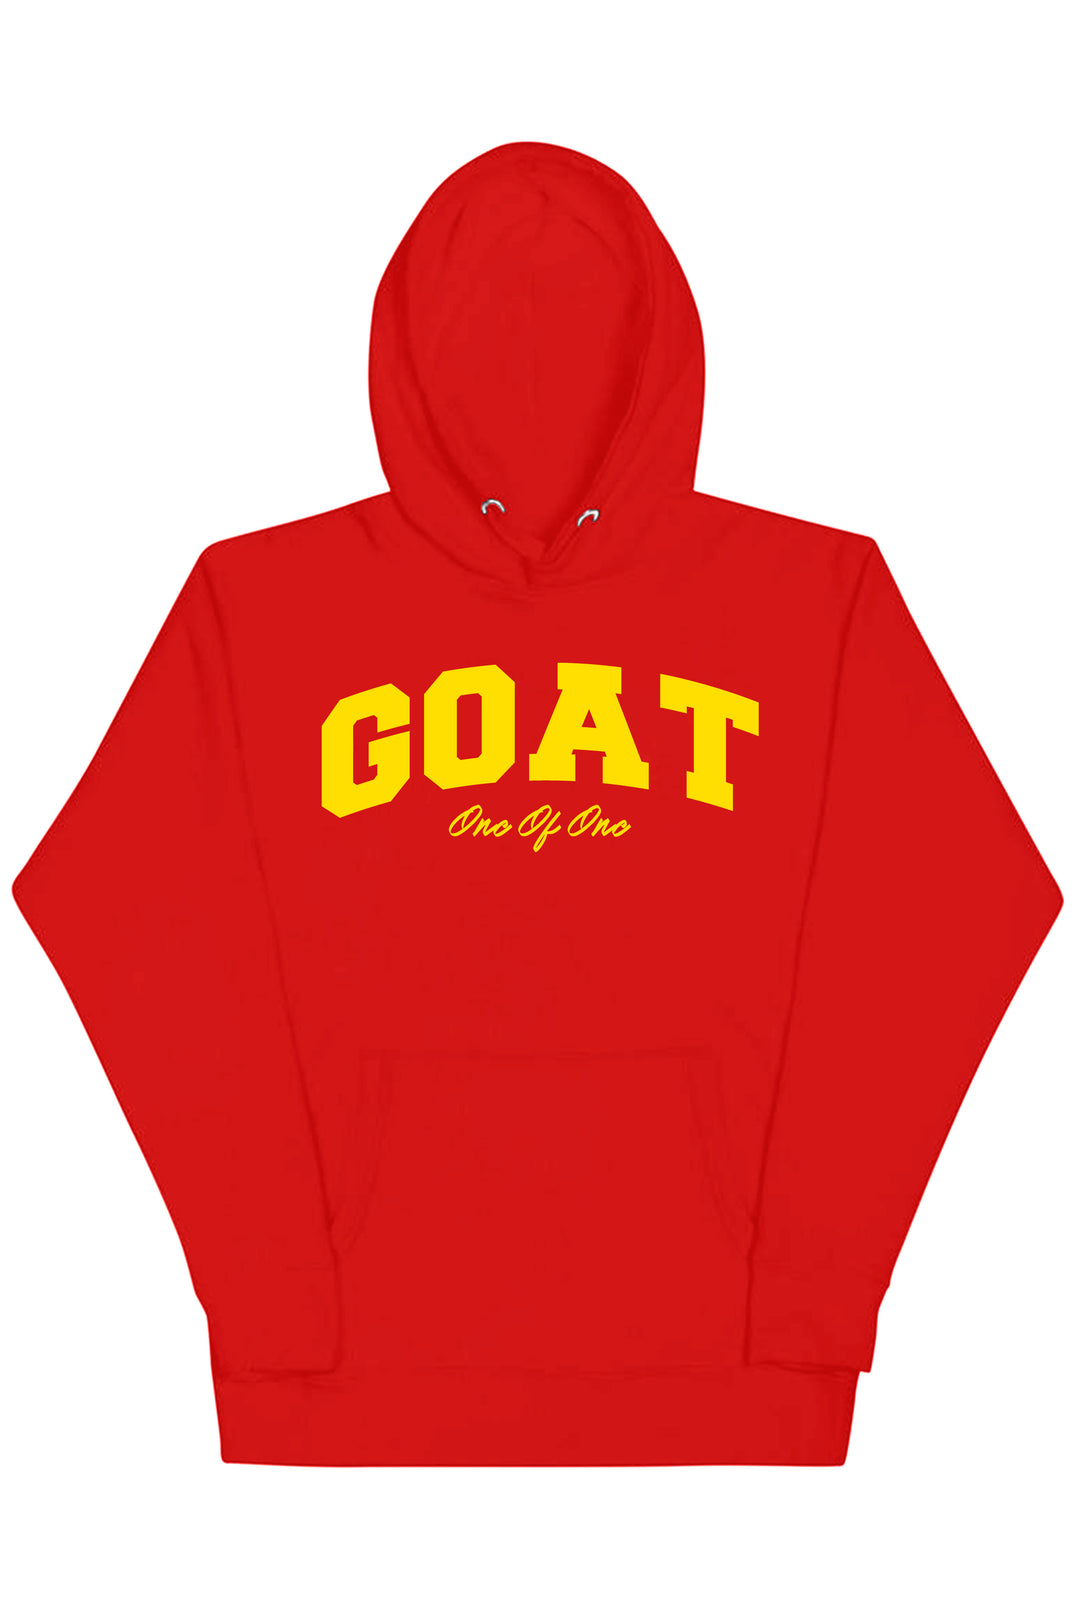 Goat Hoodie (Yellow Logo) - Zamage